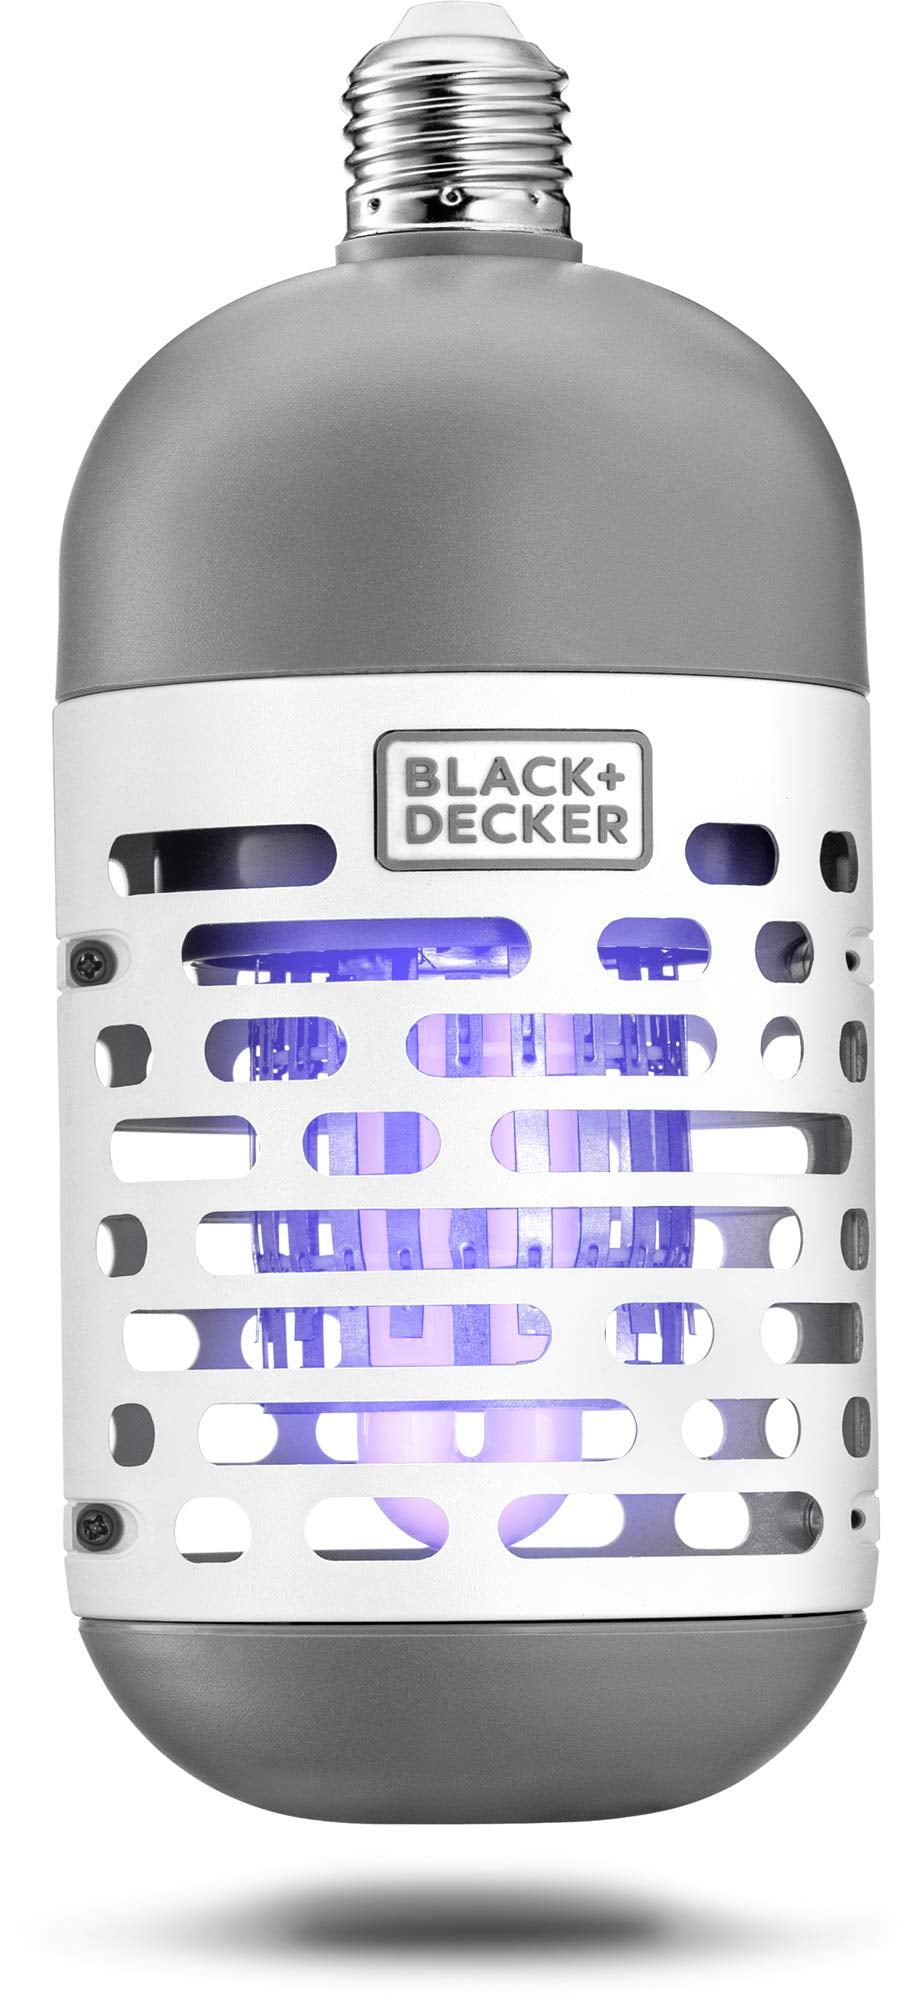 Black+decker 7-Watt Indoor and Outdoor Electric Bug Trap, Black